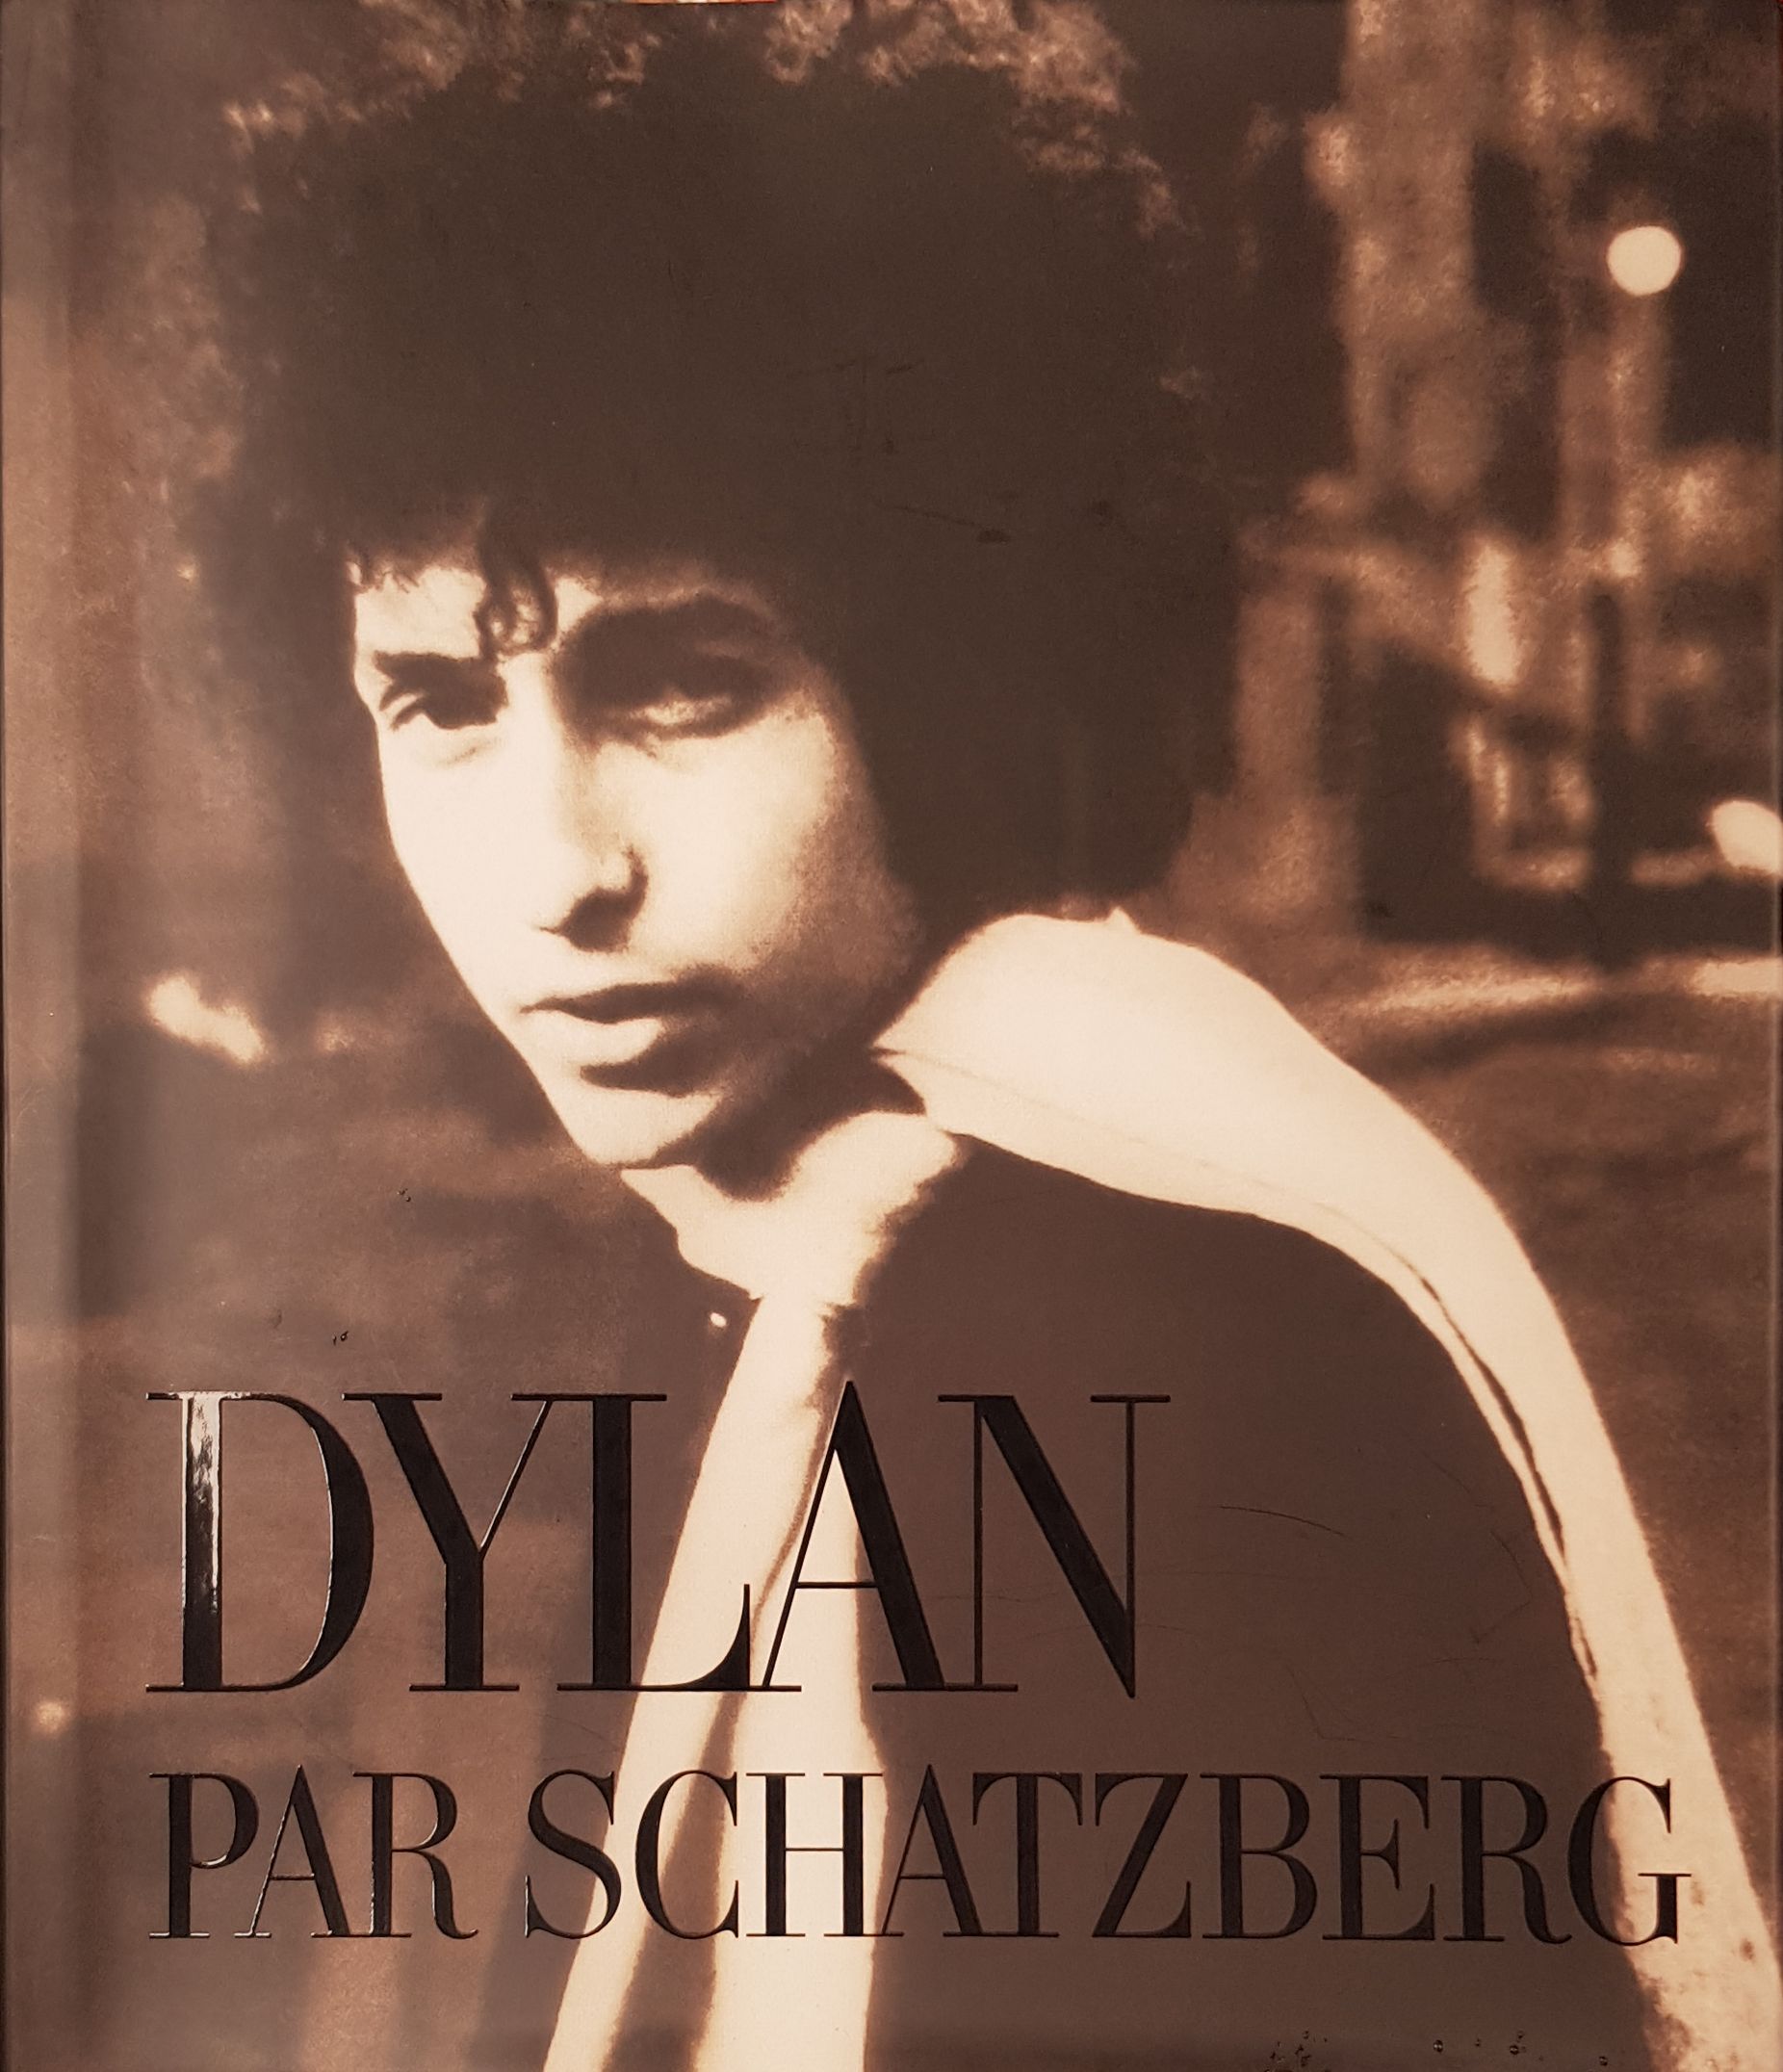 dylan par schatzberg book in French